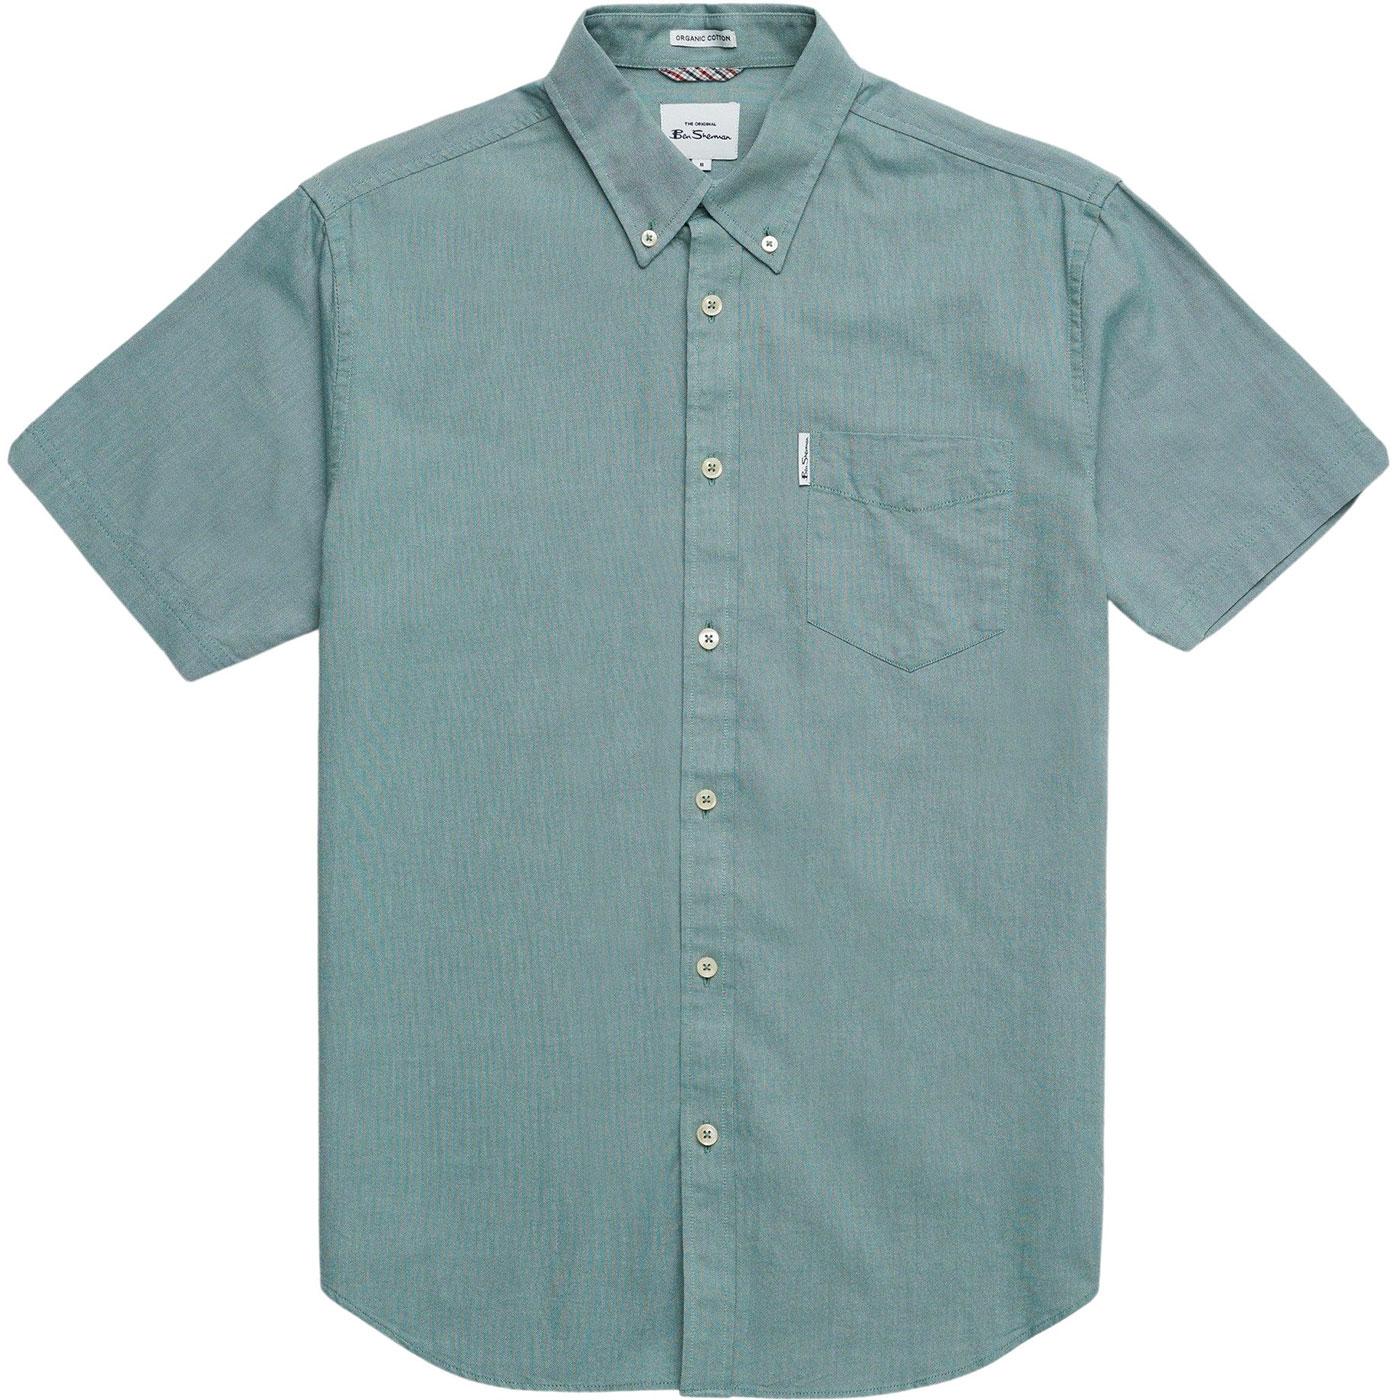 BEN SHERMAN Mod Button Down Oxford Shirt in Jade